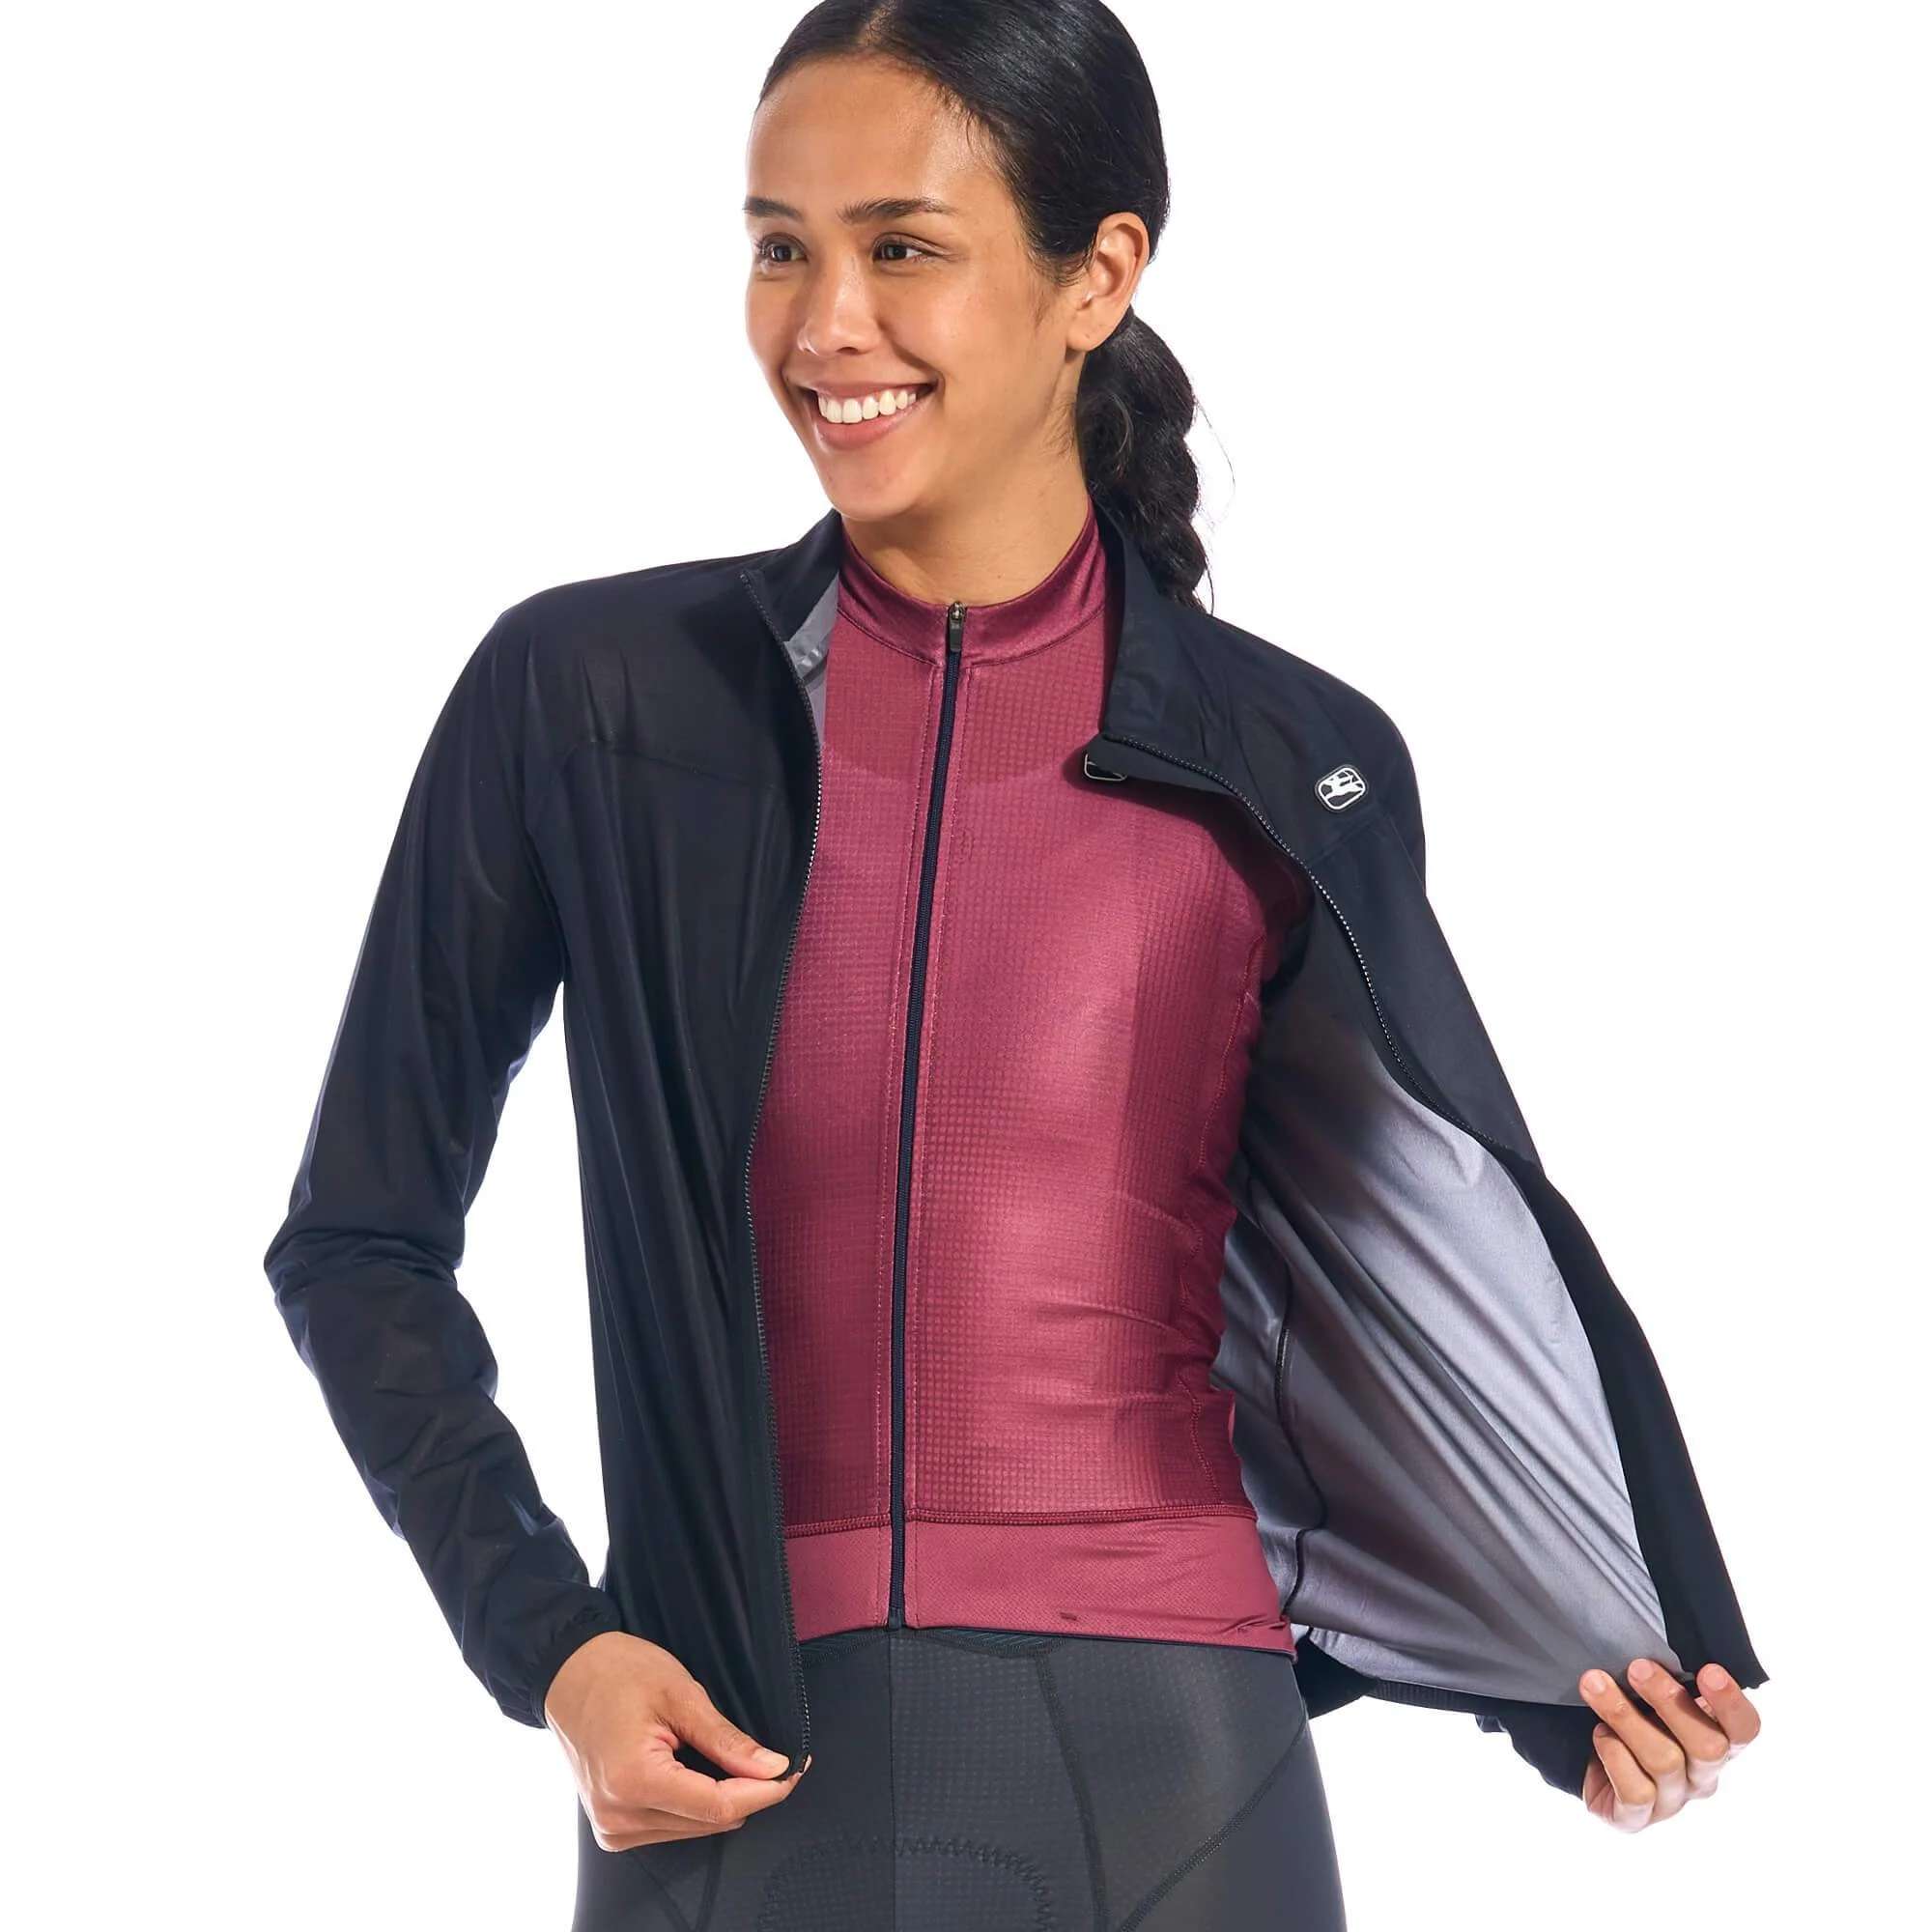 Giordana FR-C Pro Rain Jacket, available at Lakeside Bicycles